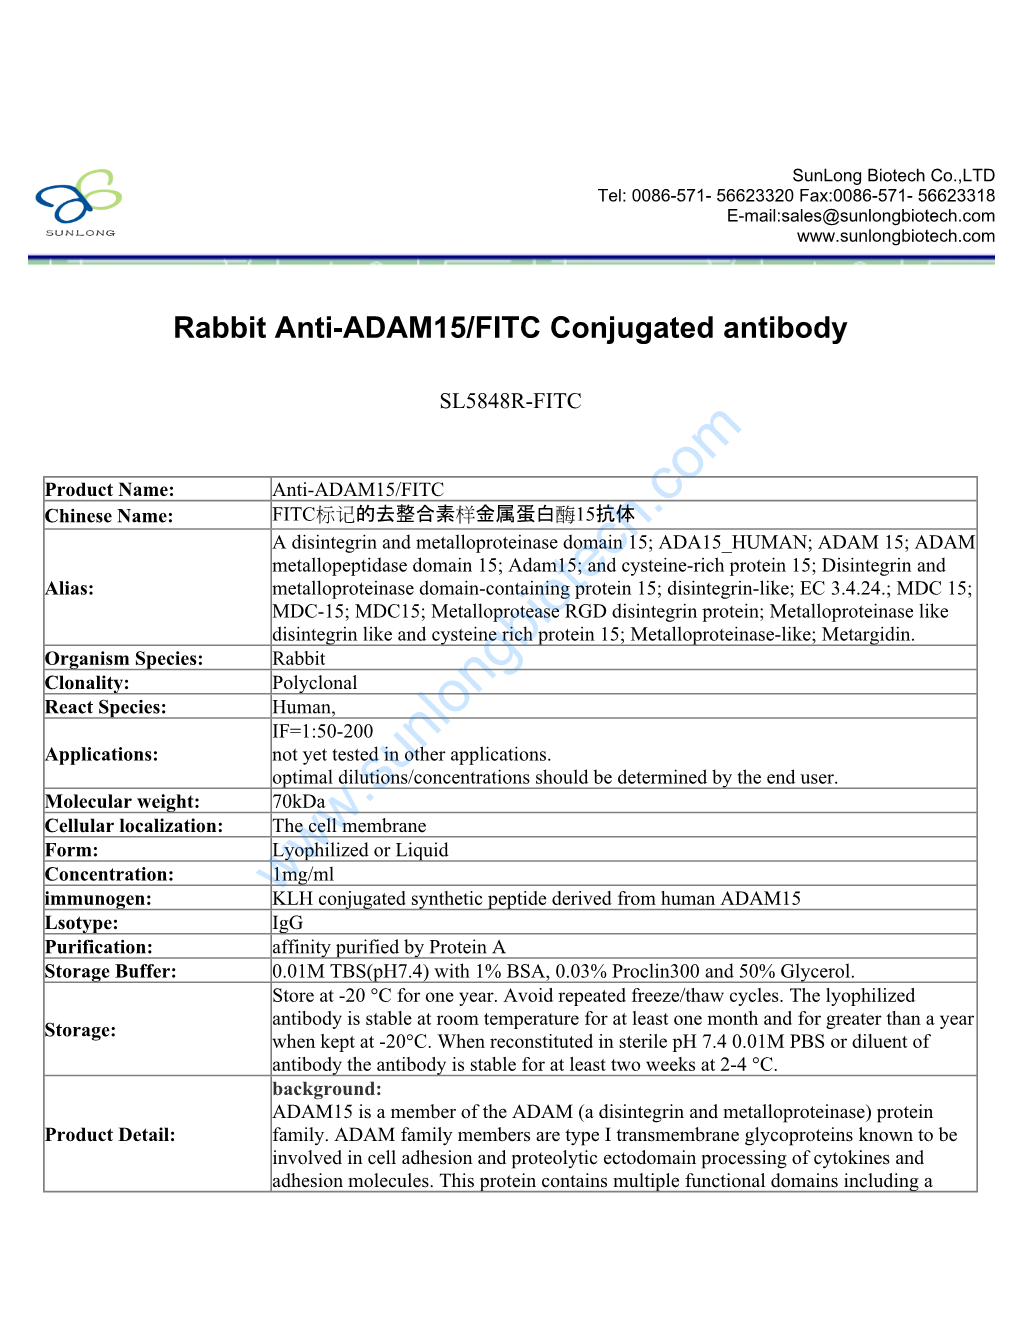 Rabbit Anti-ADAM15/FITC Conjugated Antibody-SL5848R-FITC